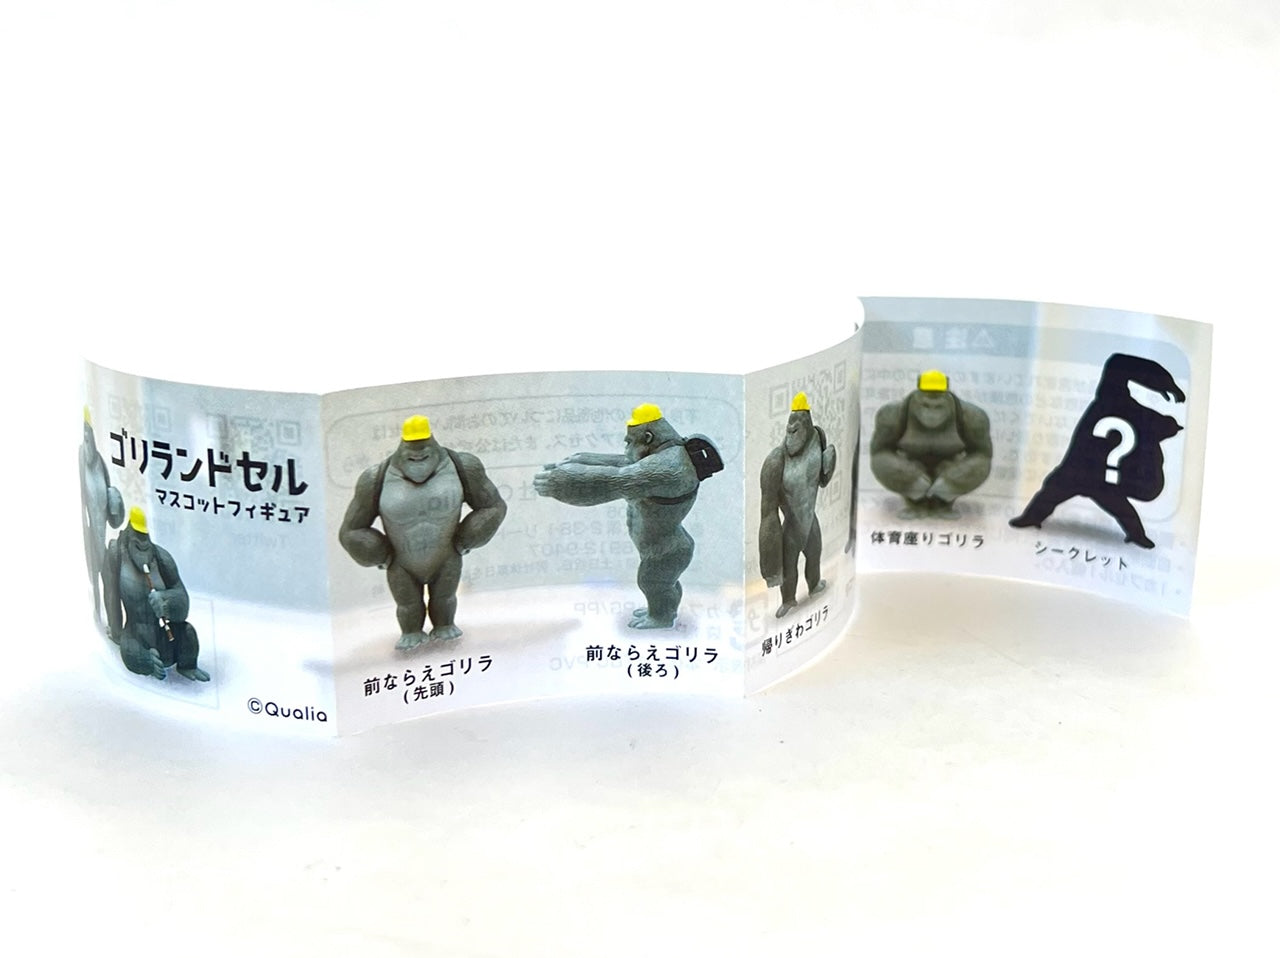 X 70928 Macho Gorillas Vol. 2 Figurines Capsule-DISCONTINUED